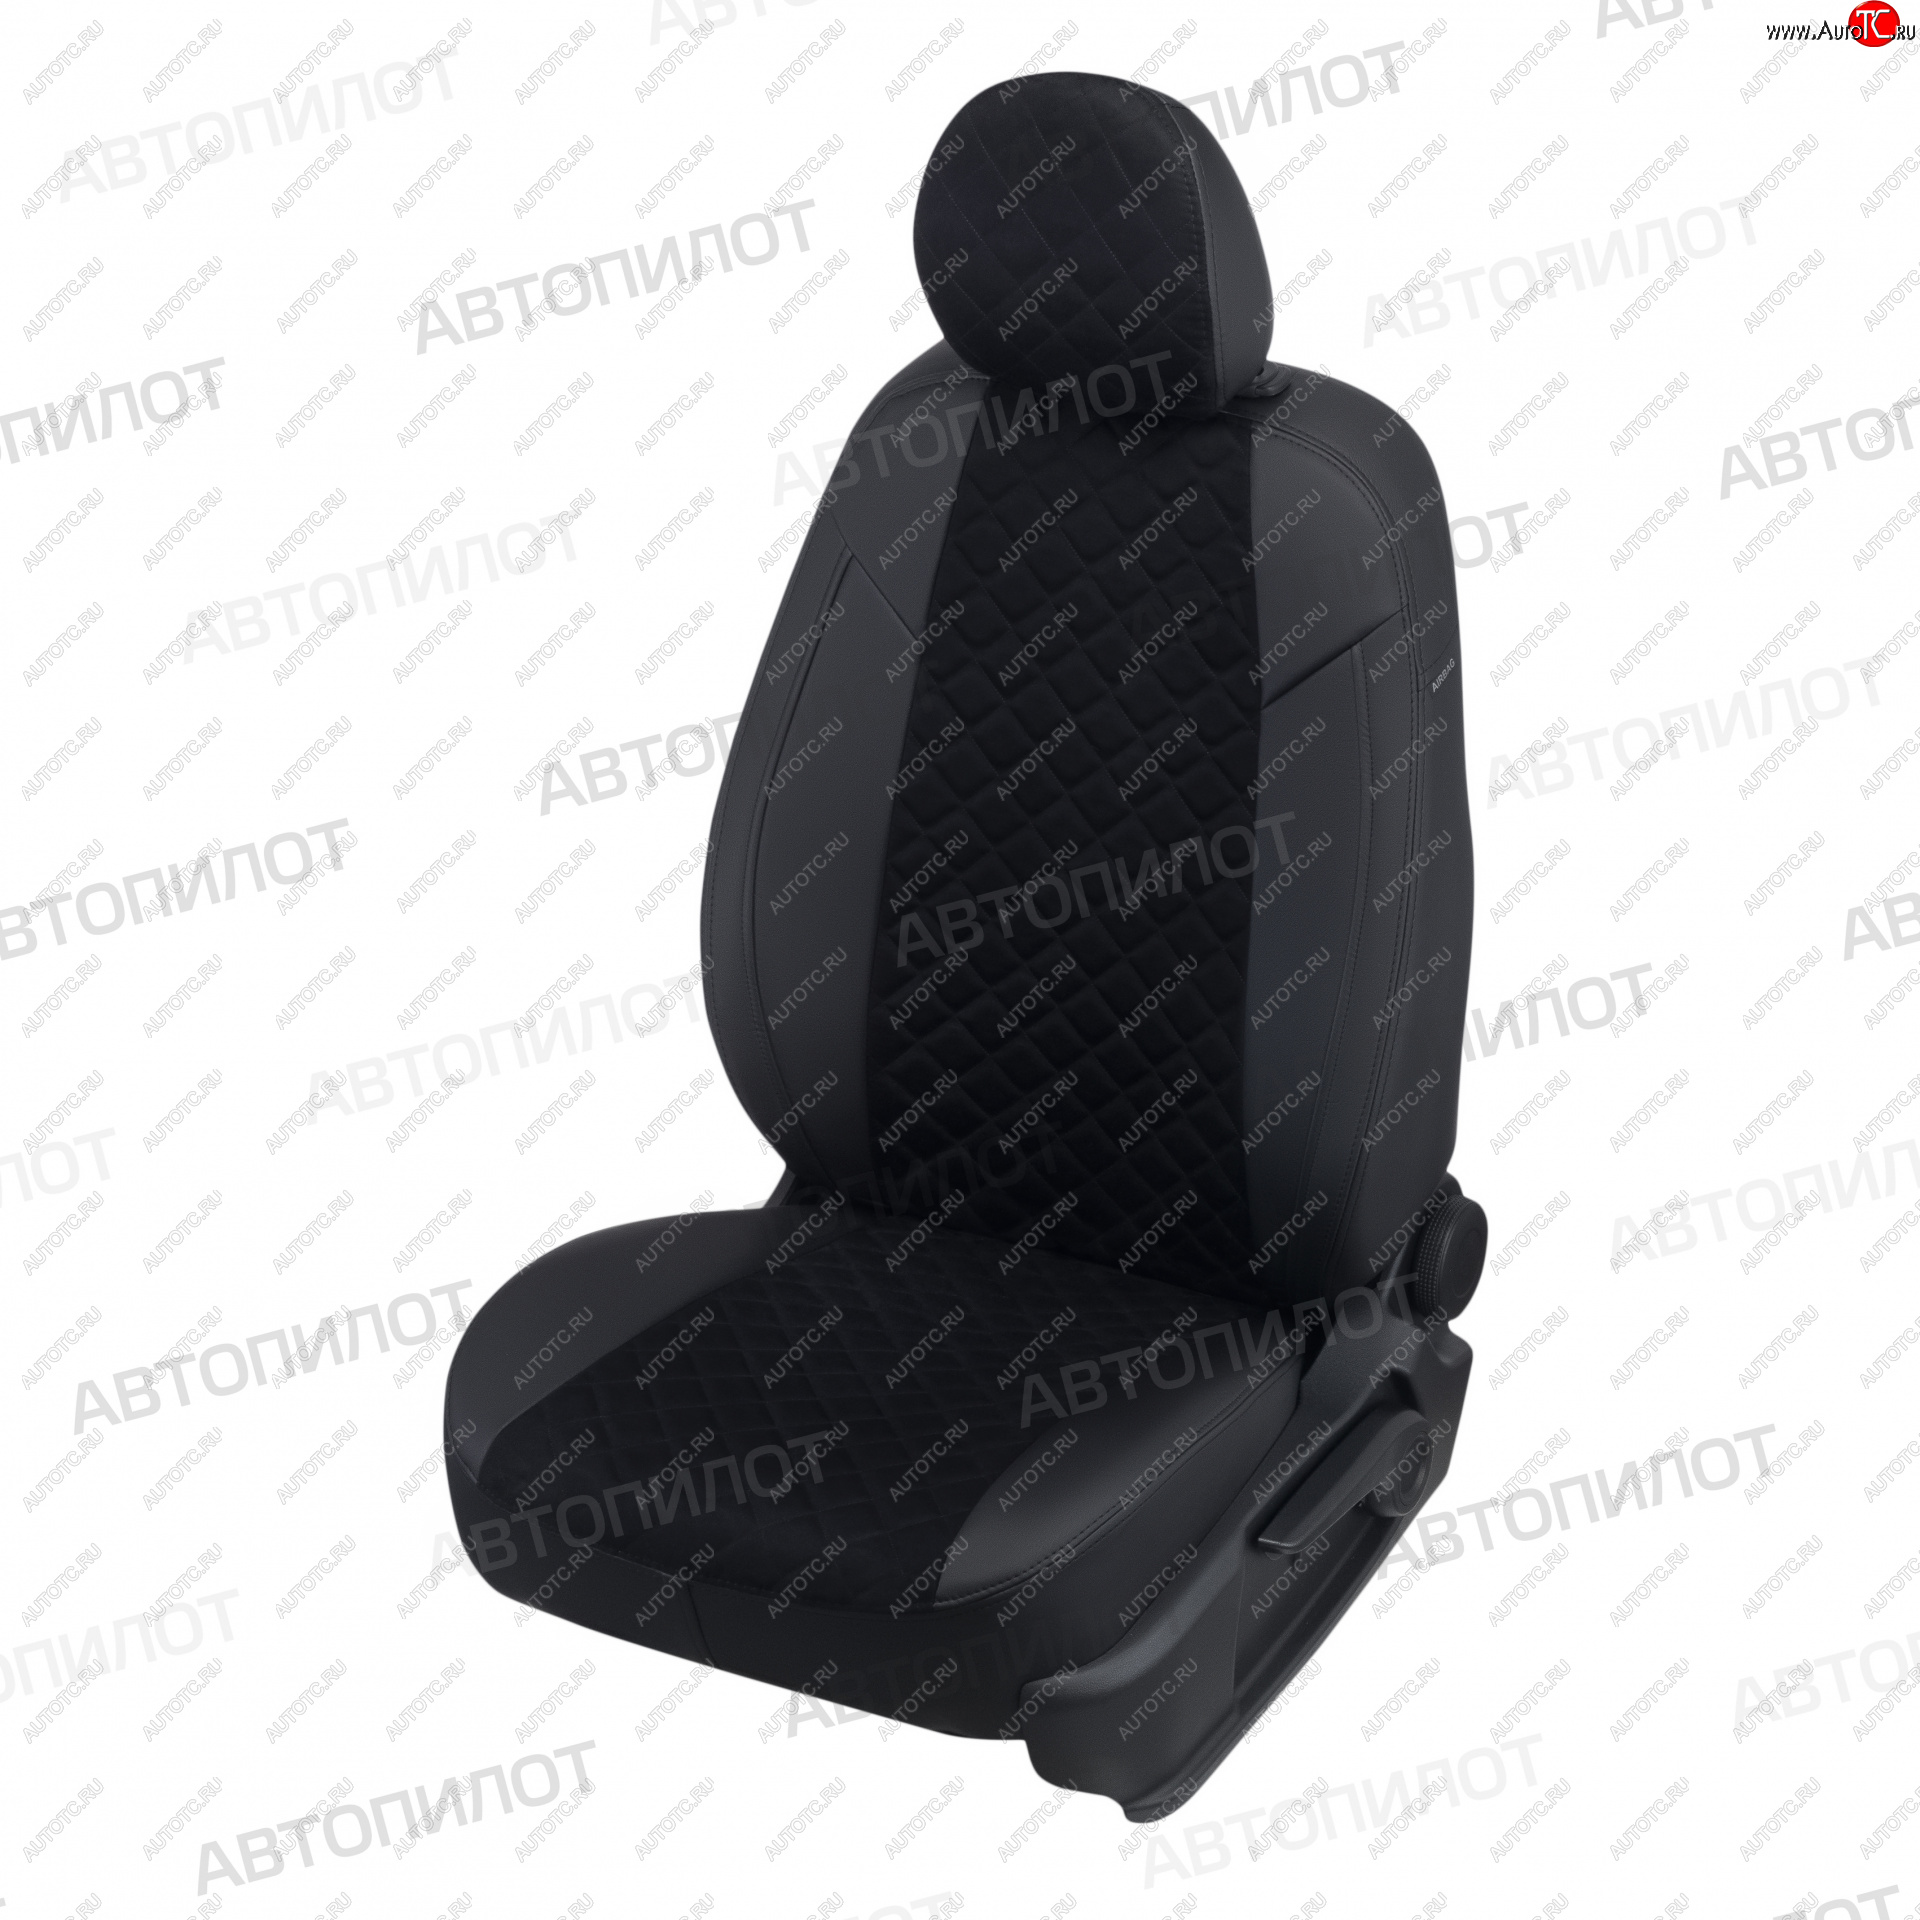 21 599 р. Чехлы сидений (экокожа/алькантара, 8 мест) Автопилот Ромб  KIA Carnival  KA4 (2020-2024) (черный)